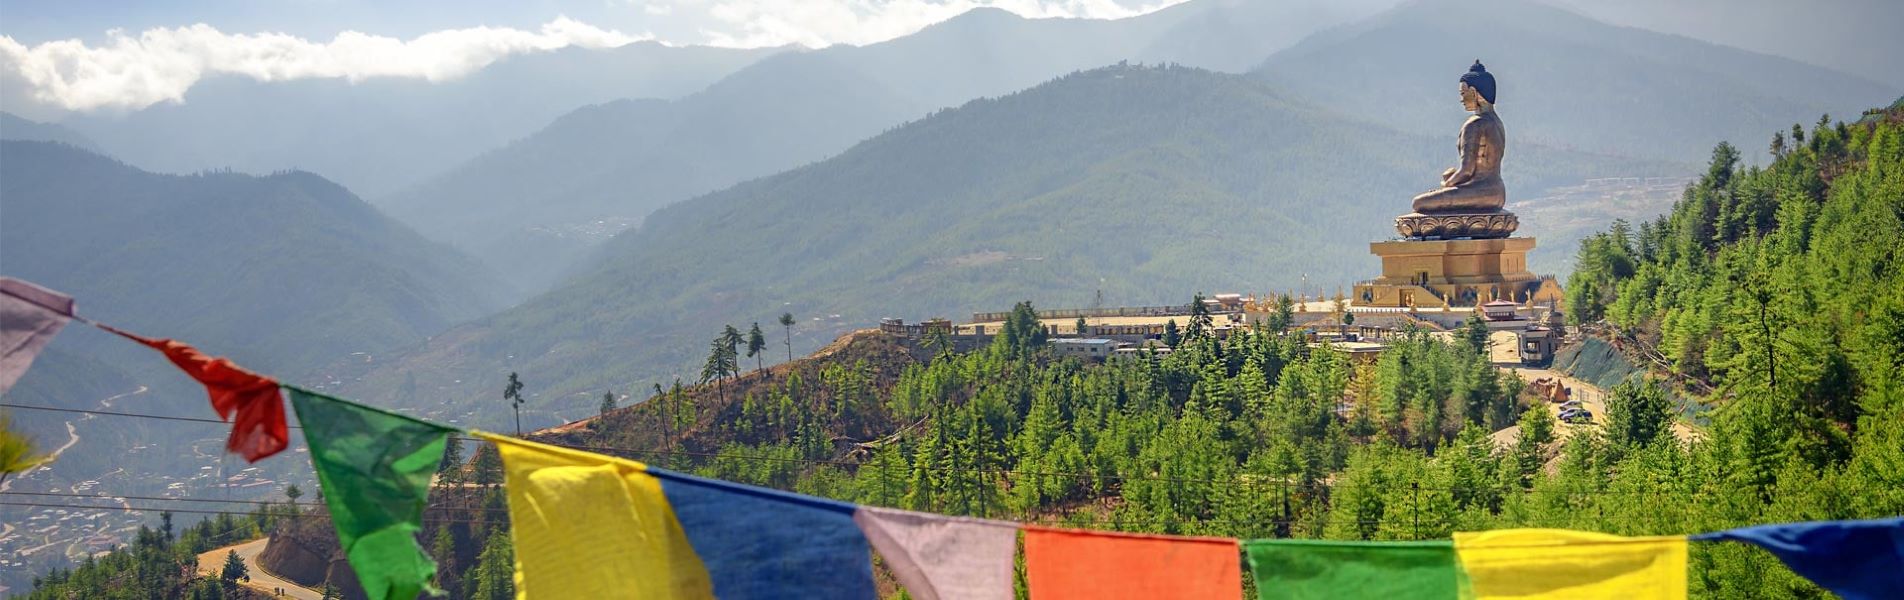 bhutan travel blog and information